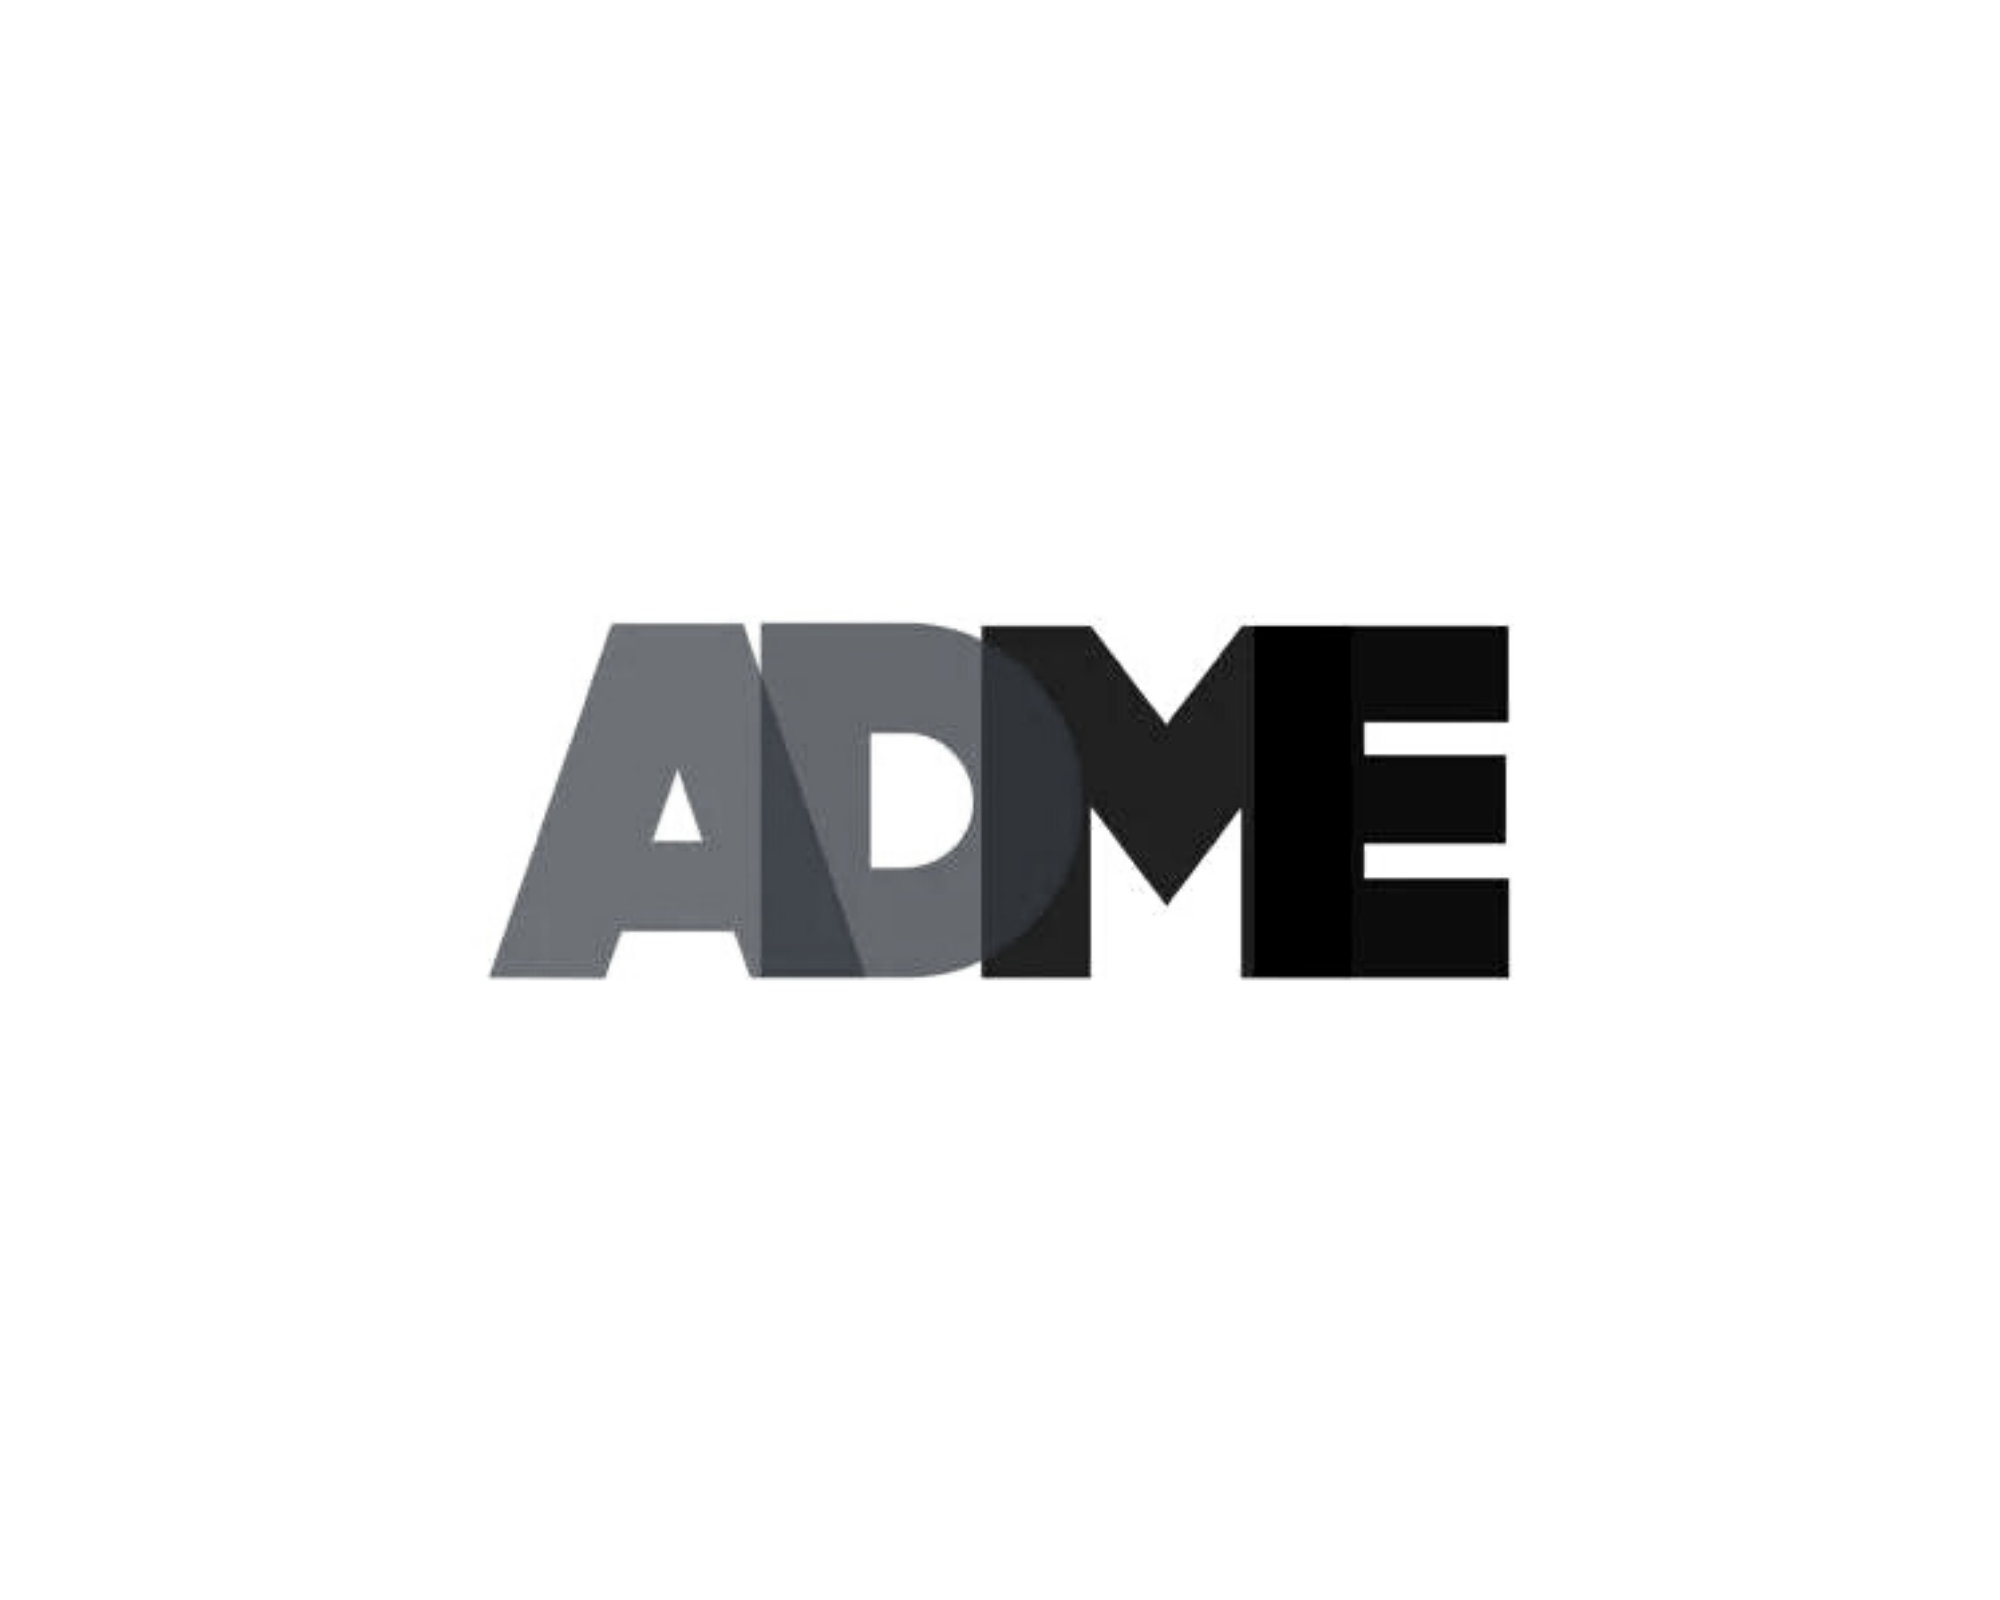 ADME logo